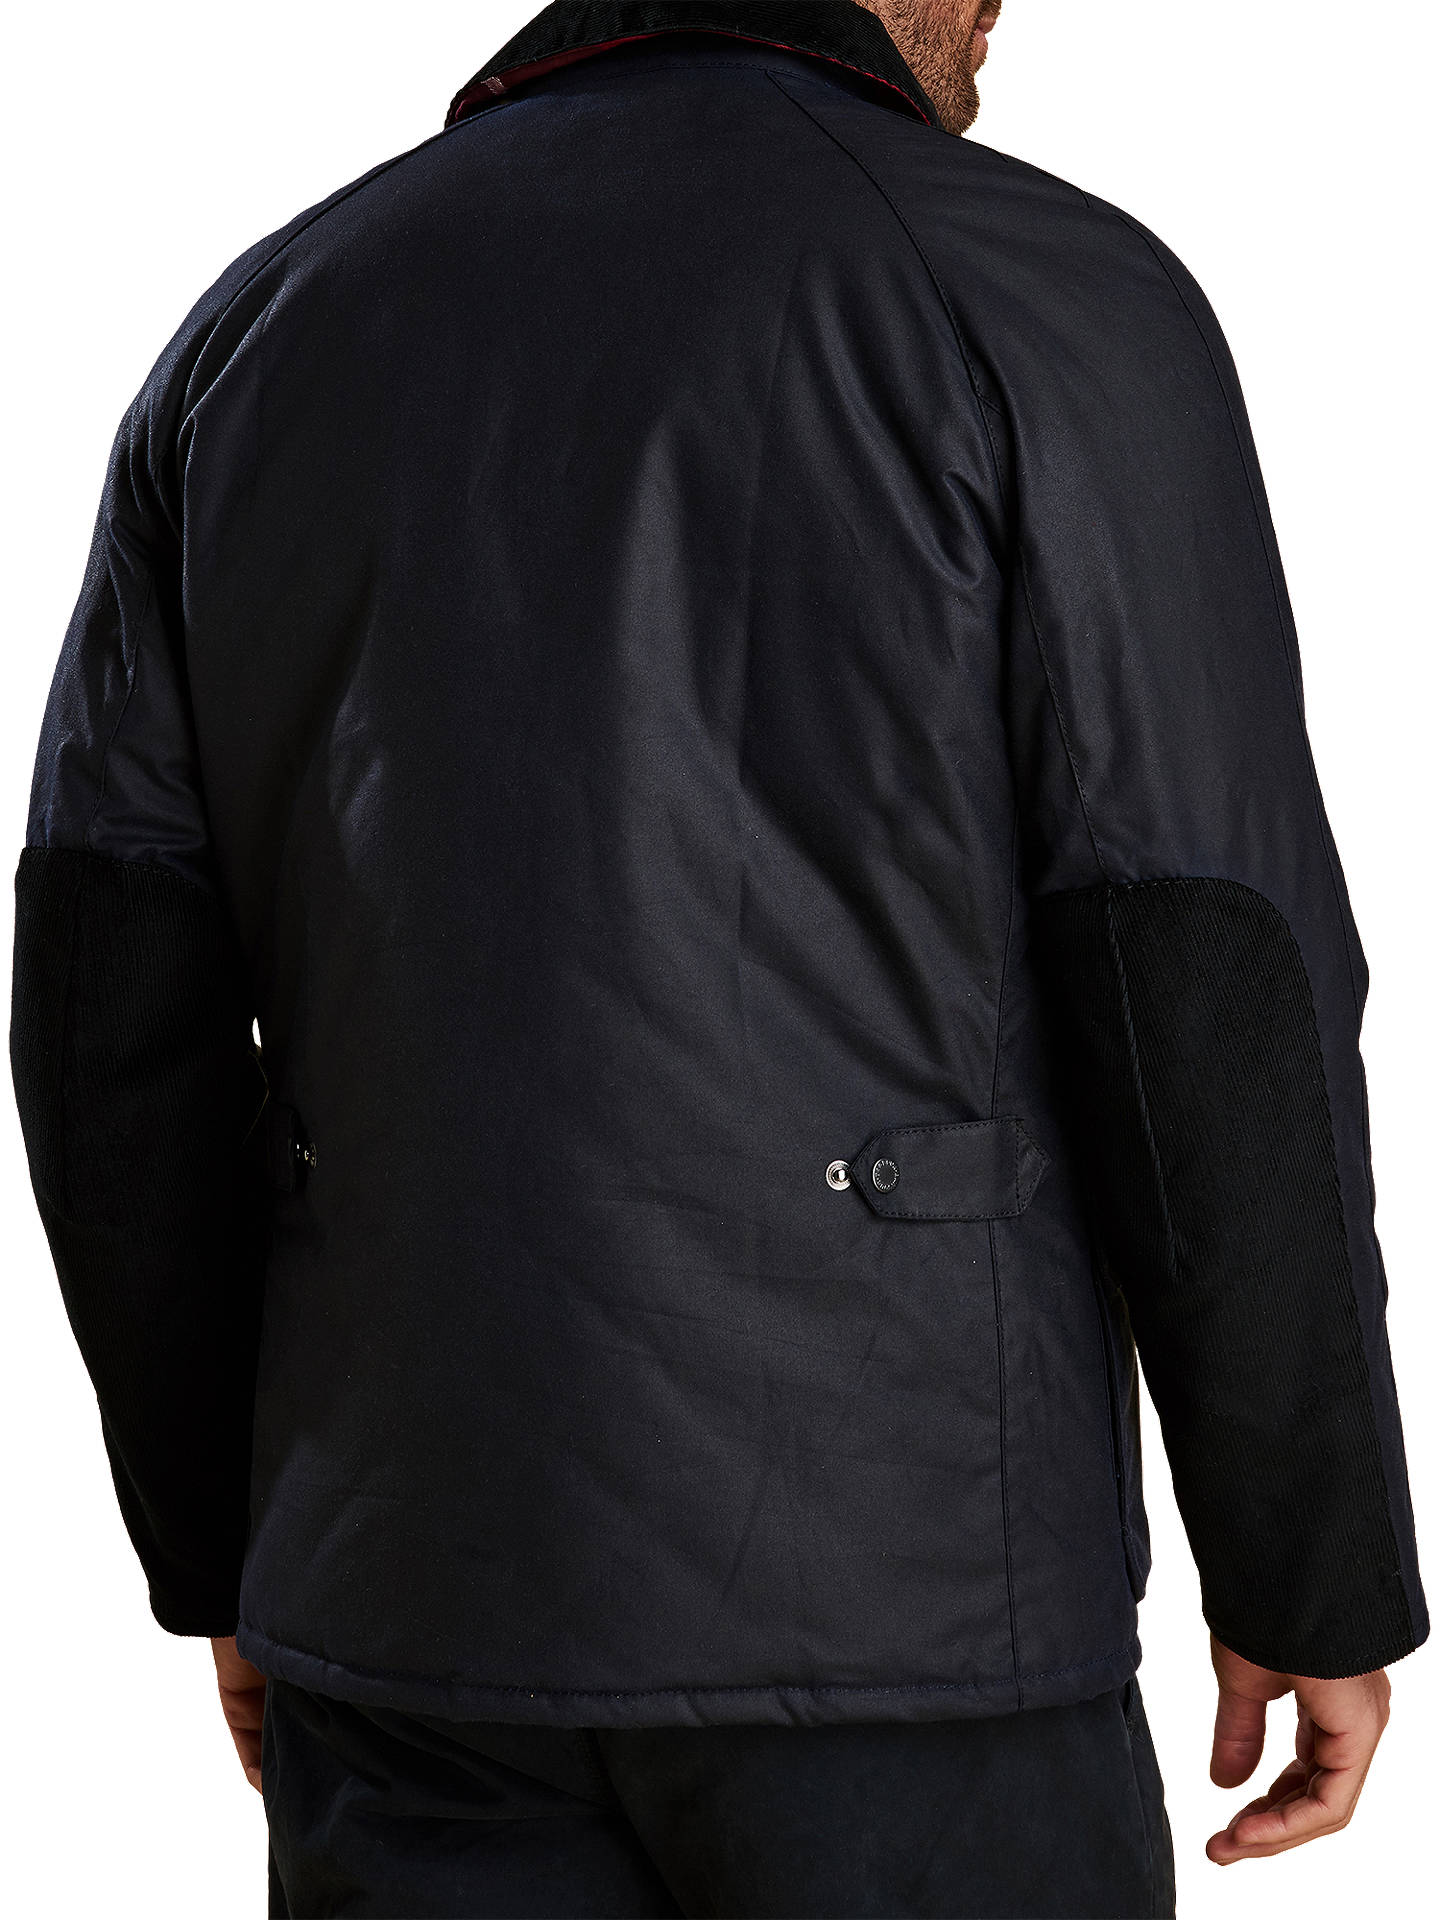 Barbour Strathyre Wax Jacket, Navy at John Lewis & Partners